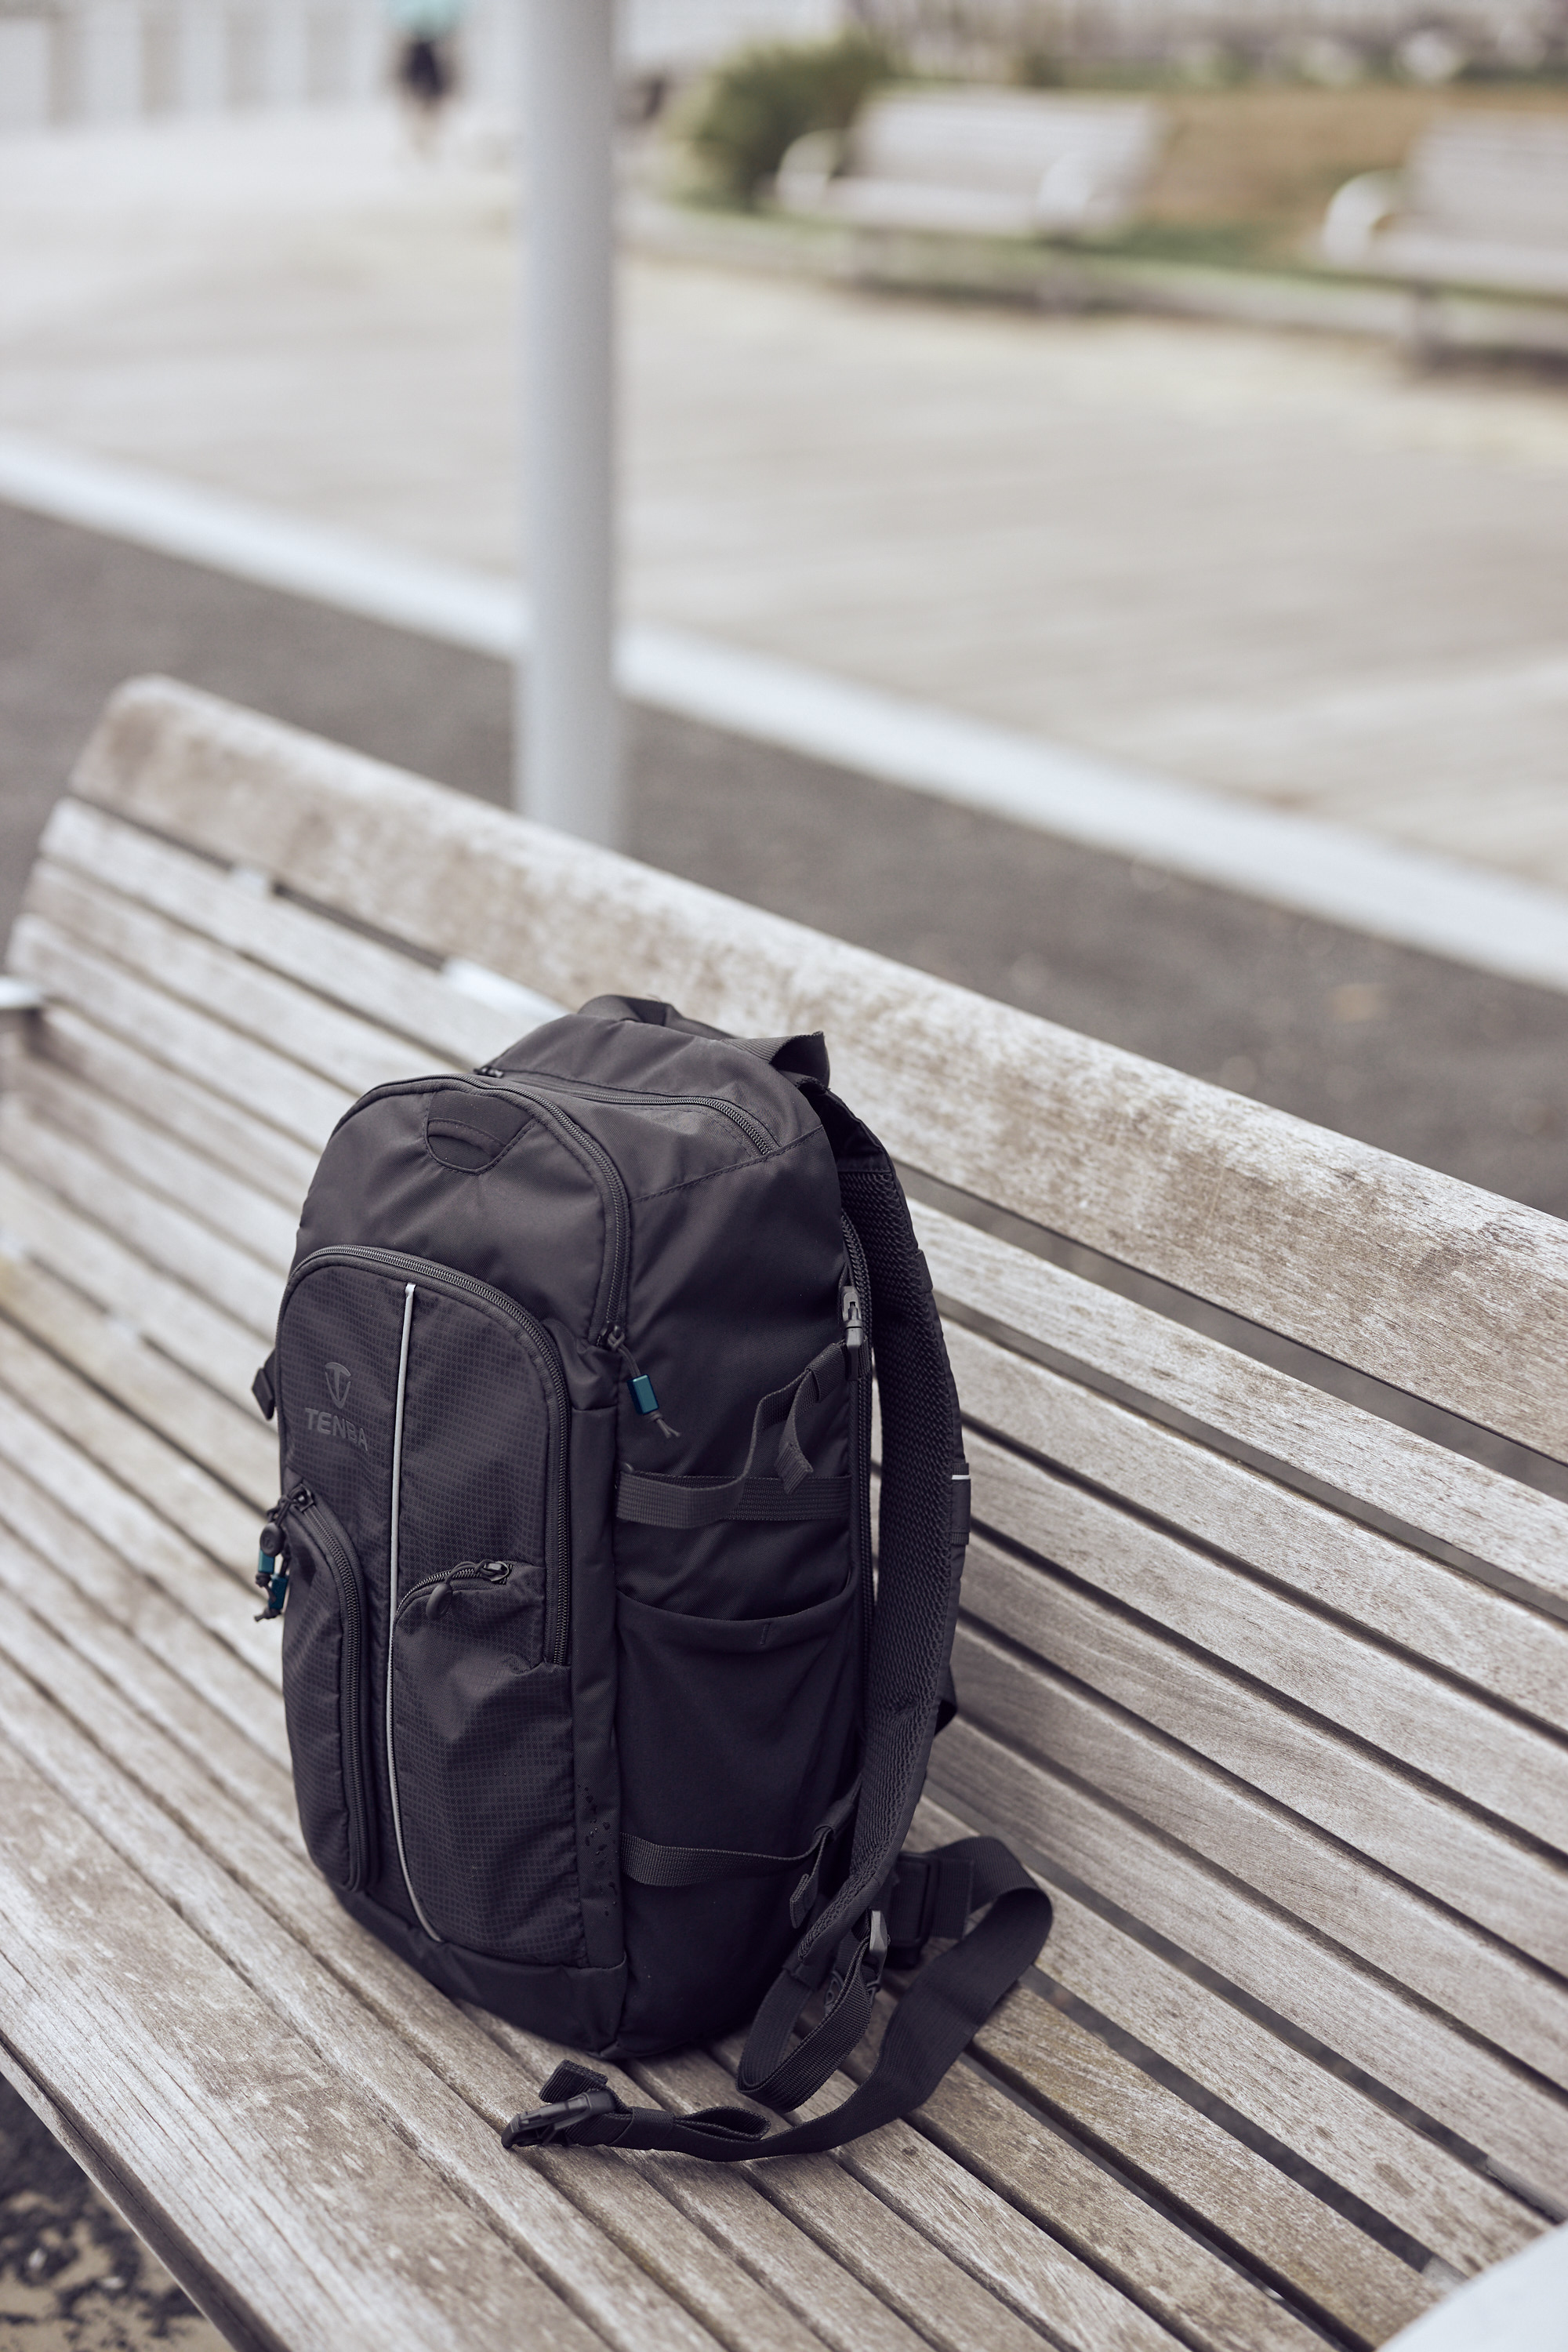 Review: Tenba Shootout 16L Bag) In-Between Backpack (The DSLR